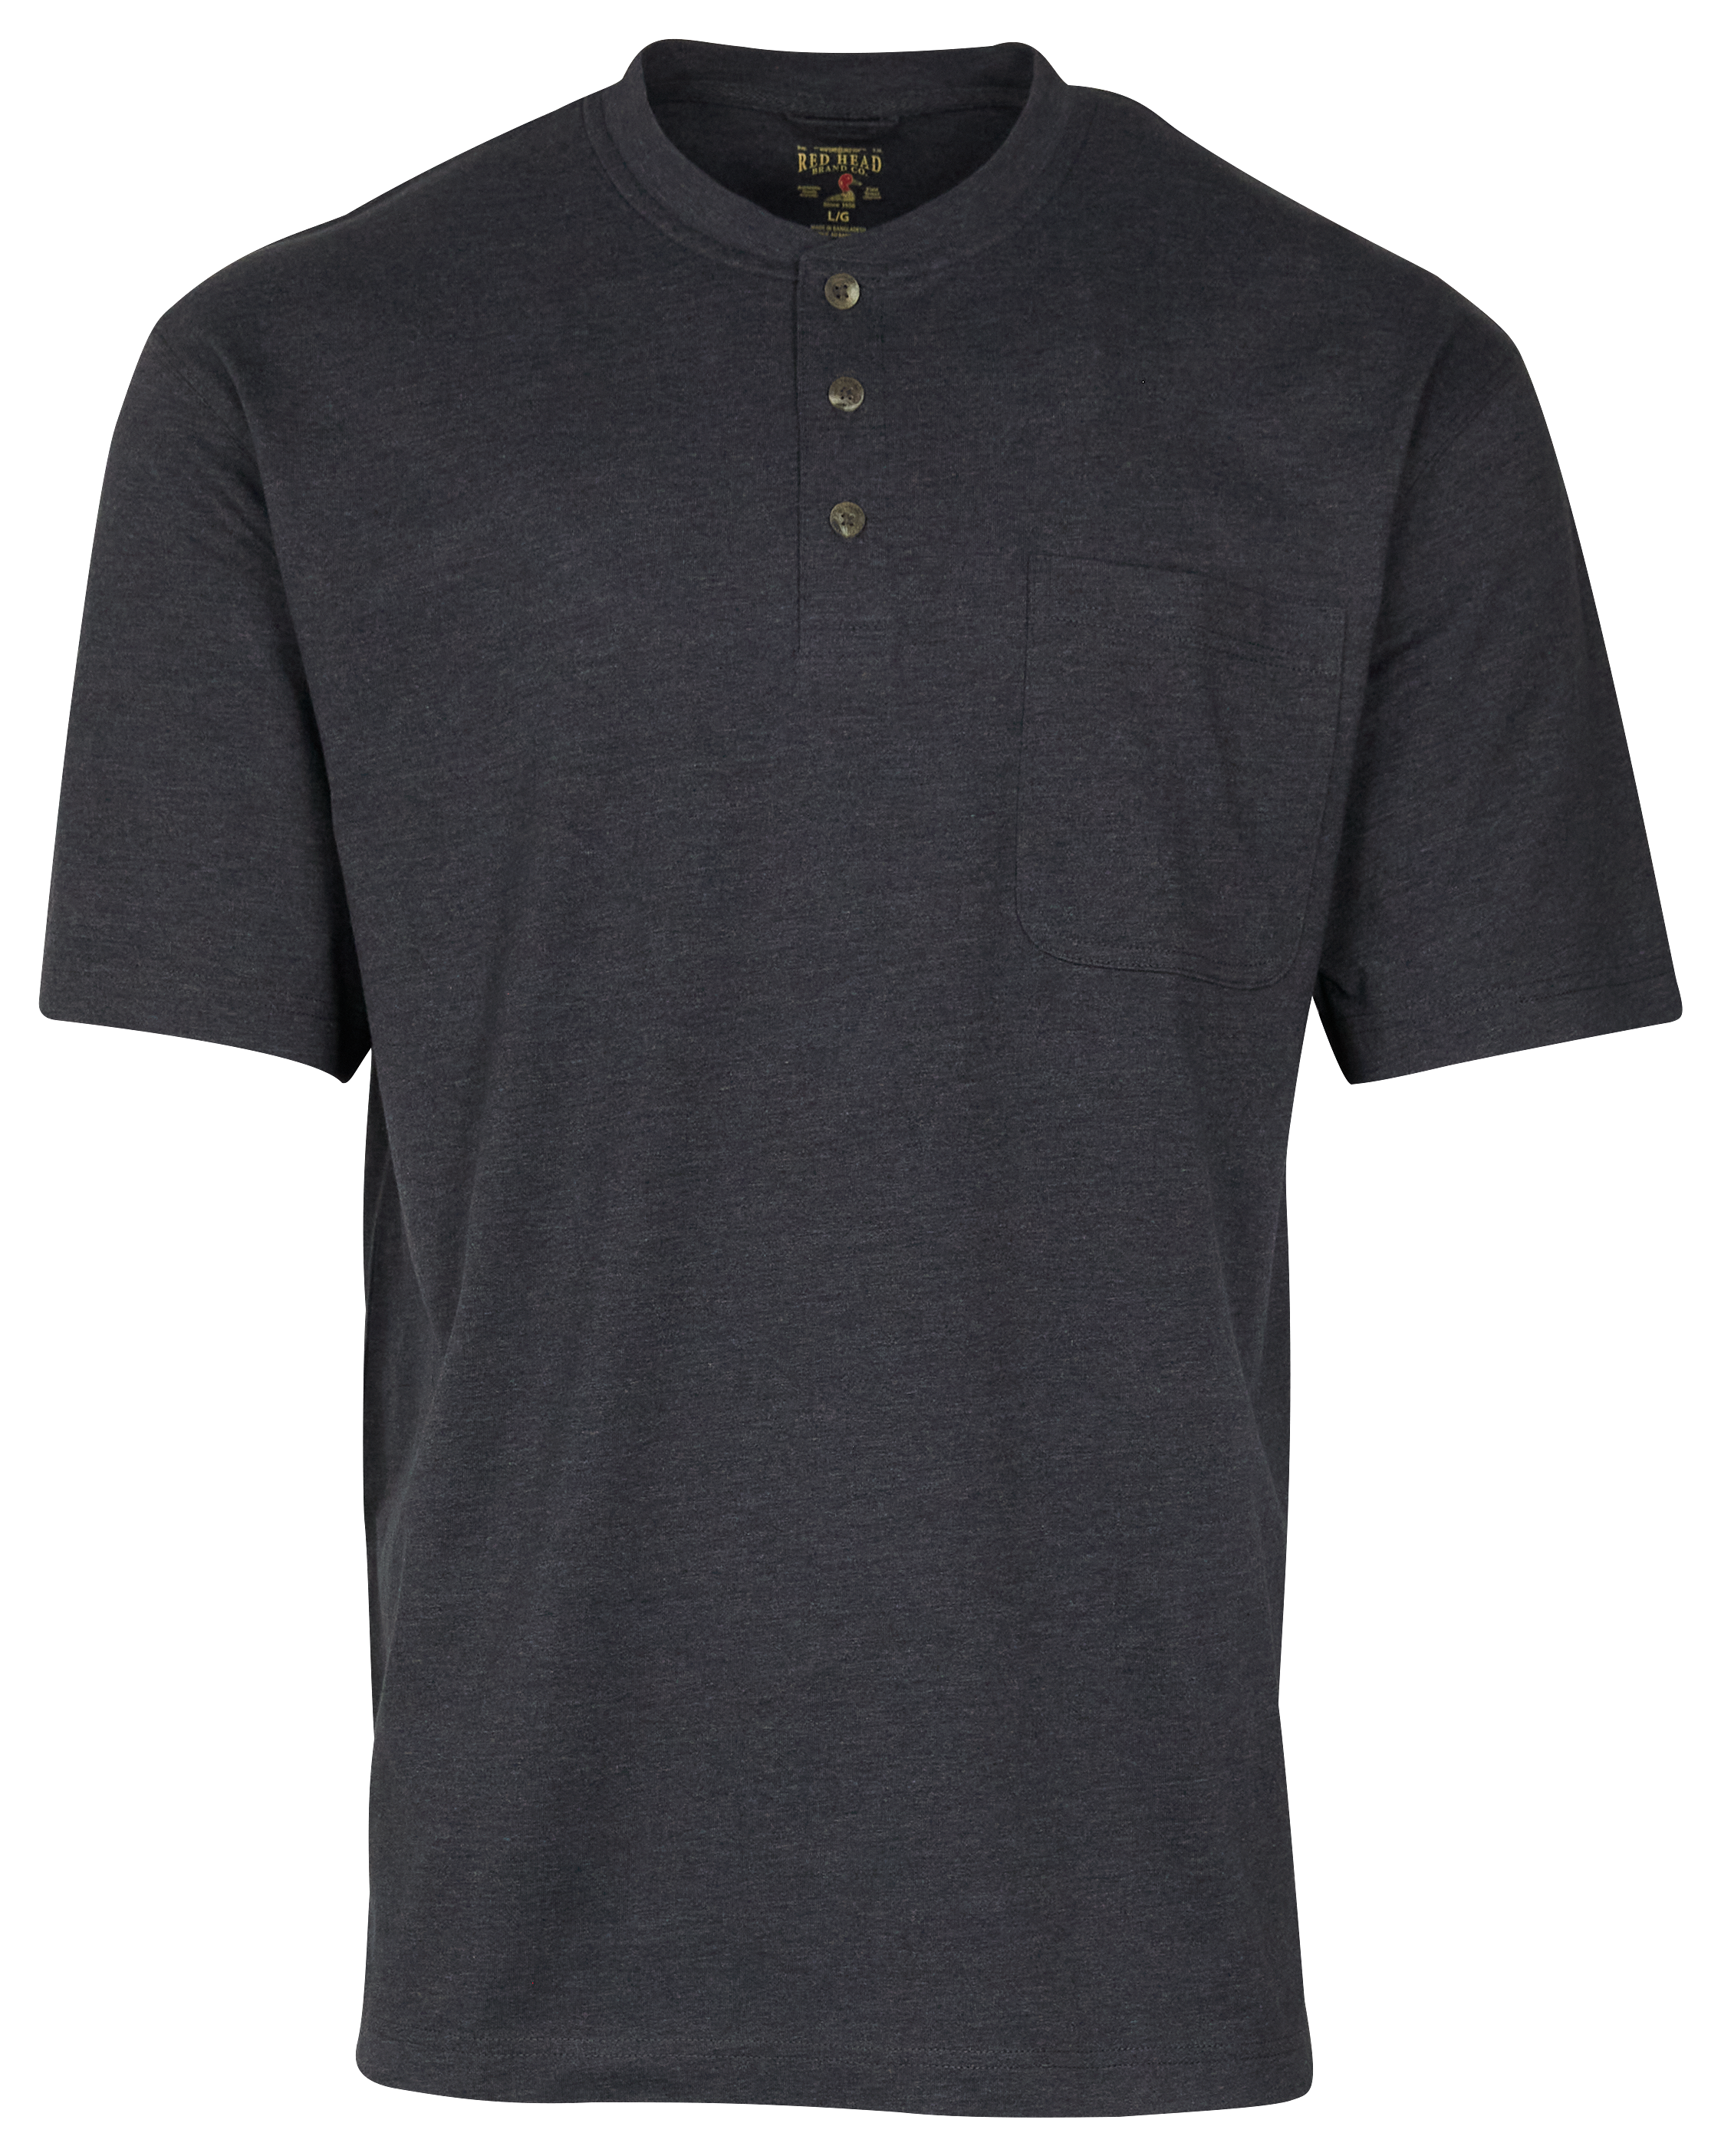 RedHead Henley Pocket Short-Sleeve Shirt for Men - Charcoal Heather - 4XL